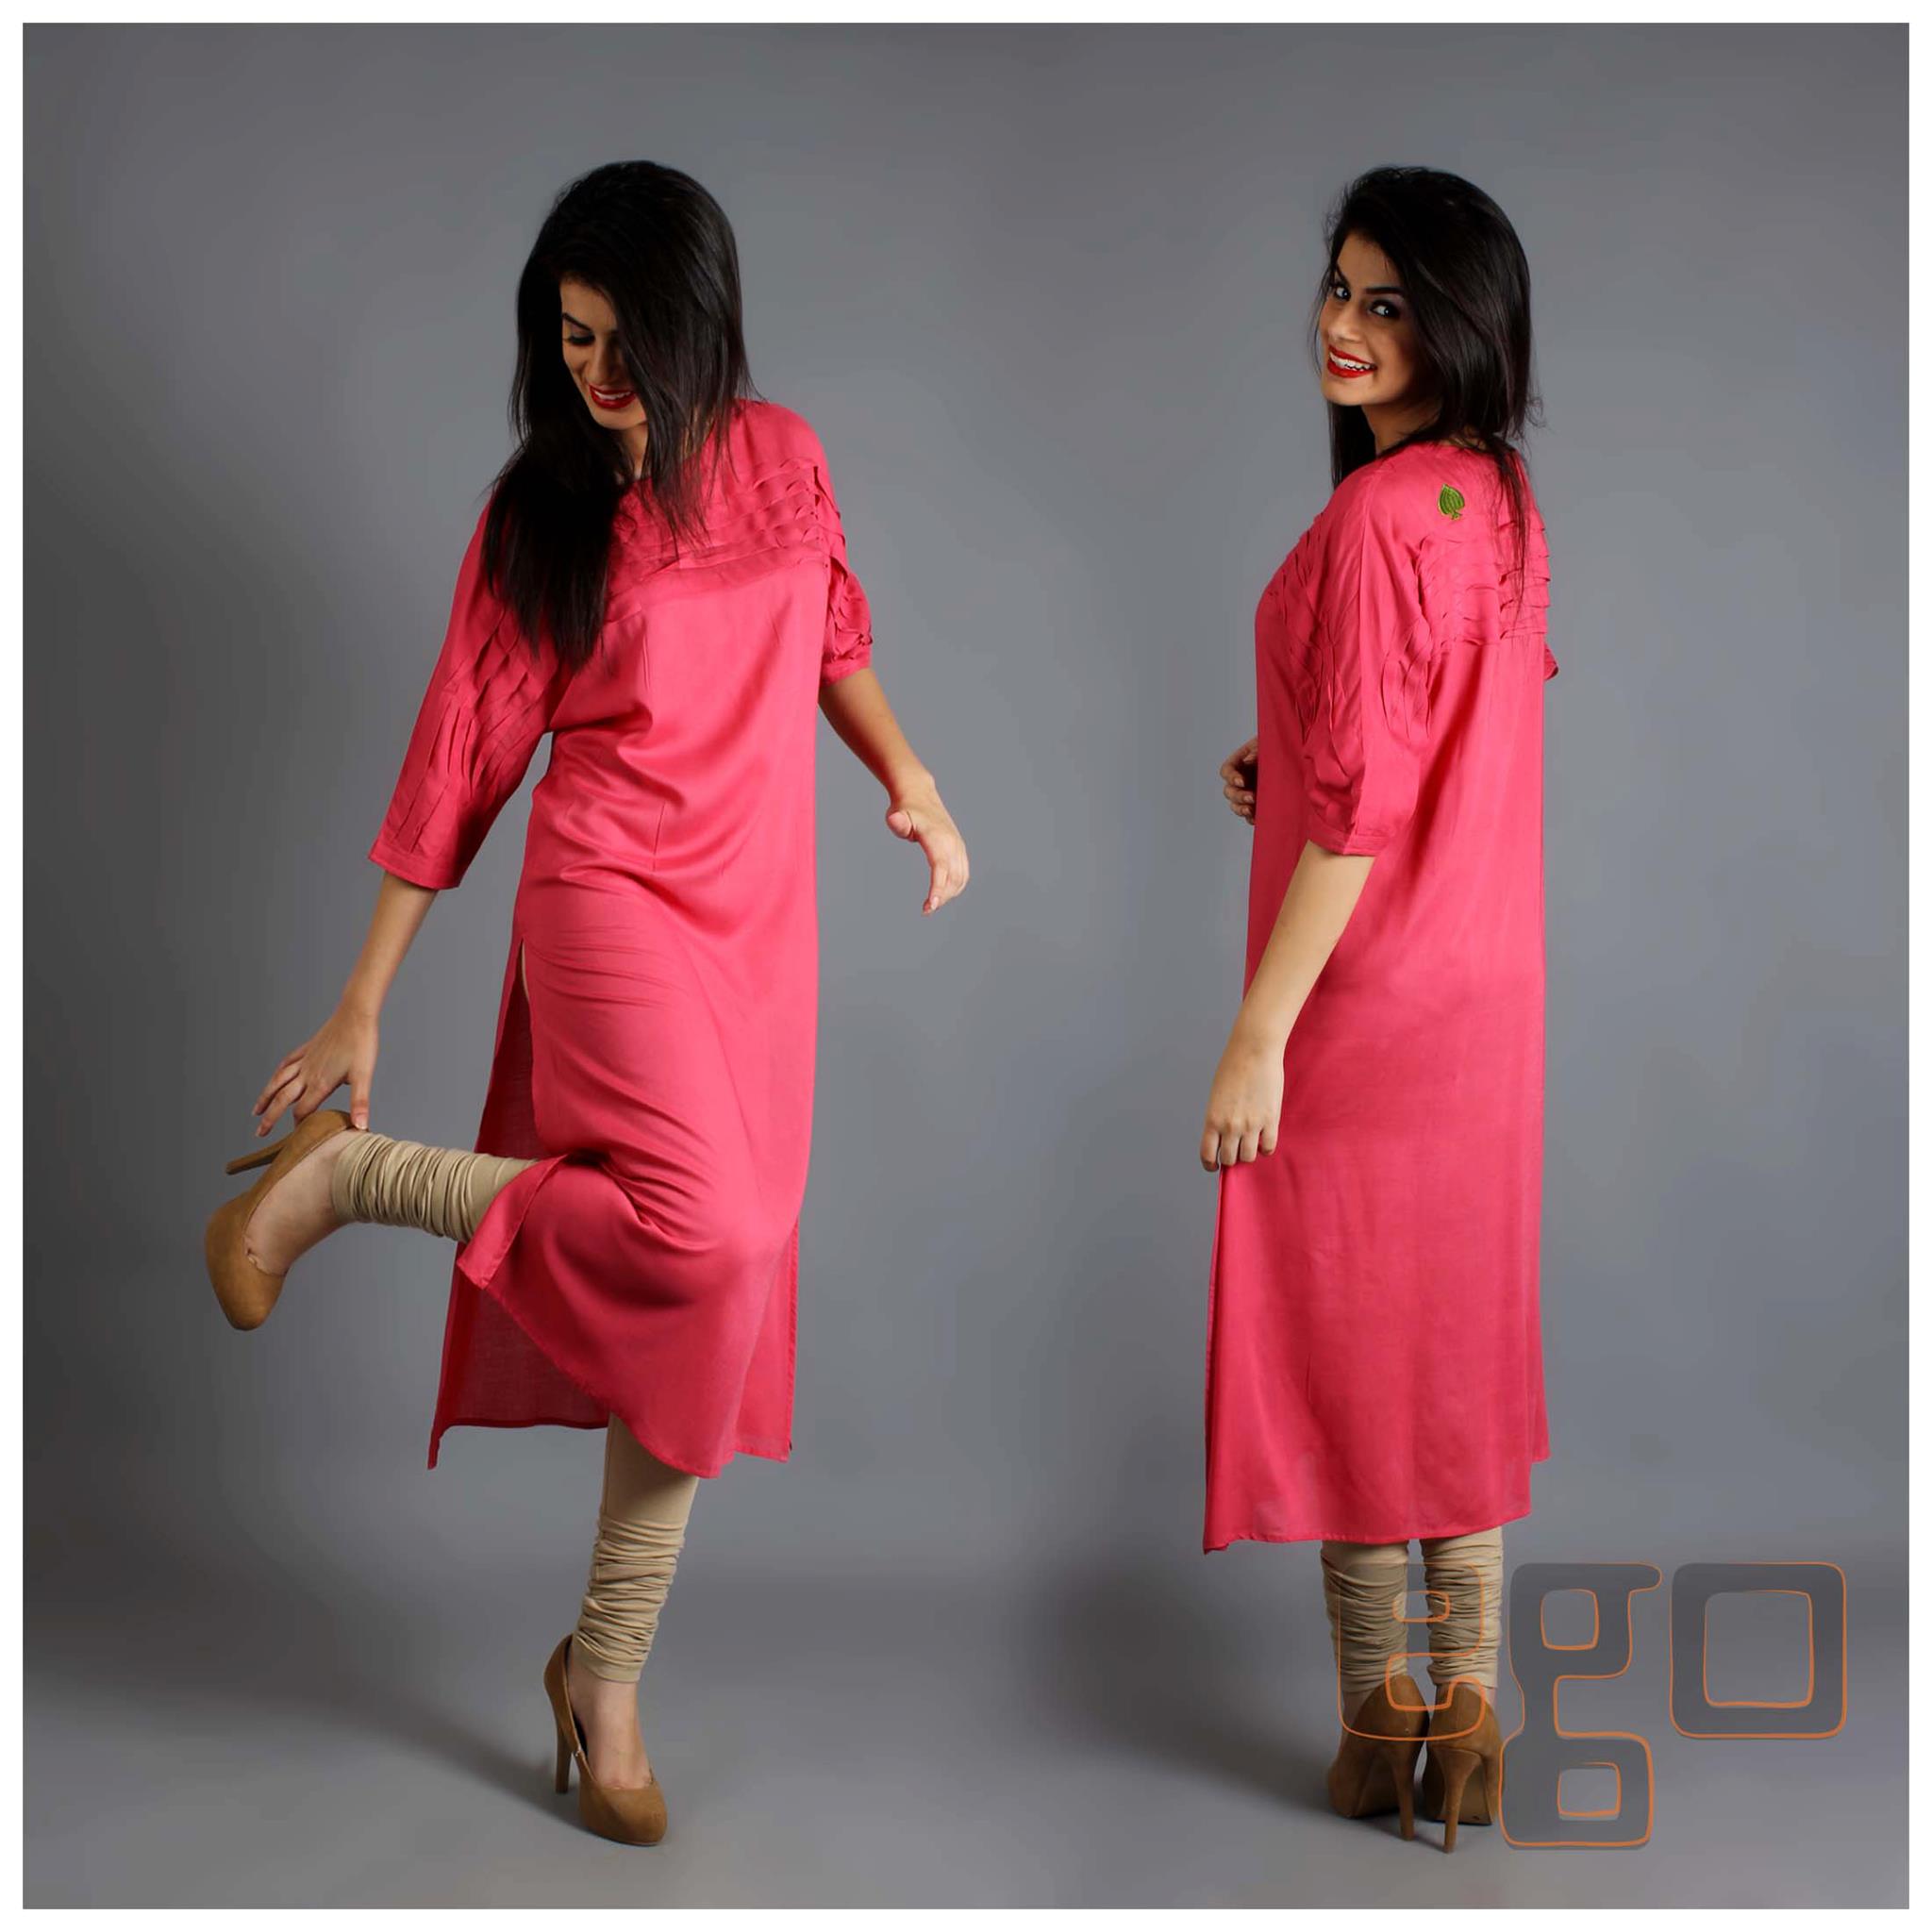 Pakistani Casual Dresses Designs 2017 Images